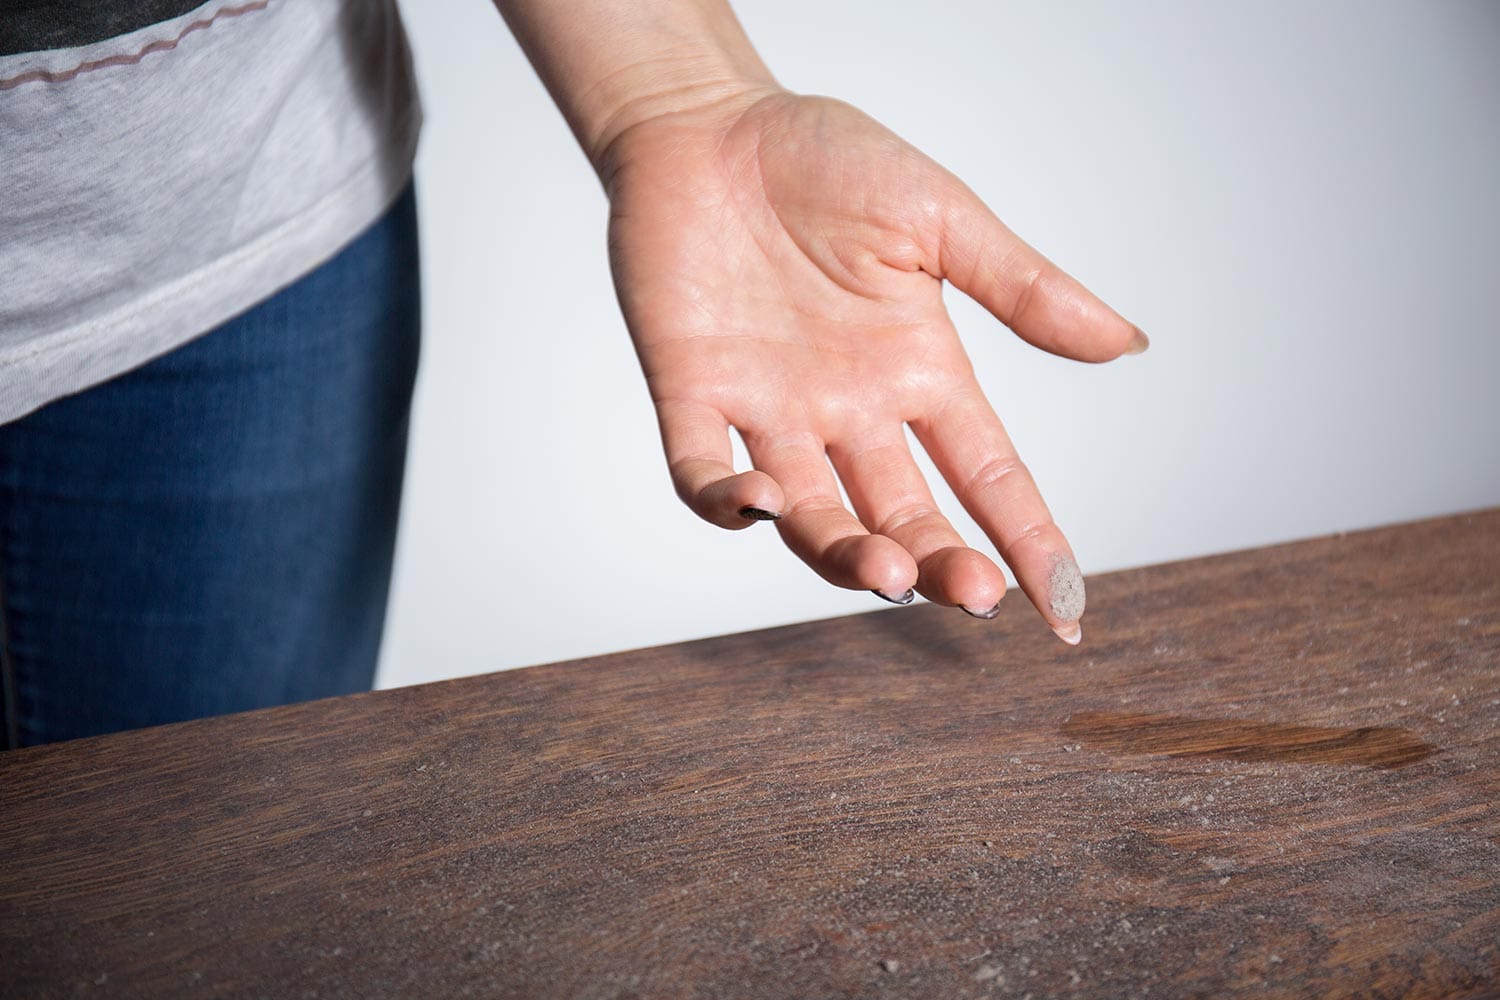 Dust on woman finger taken from wooden table